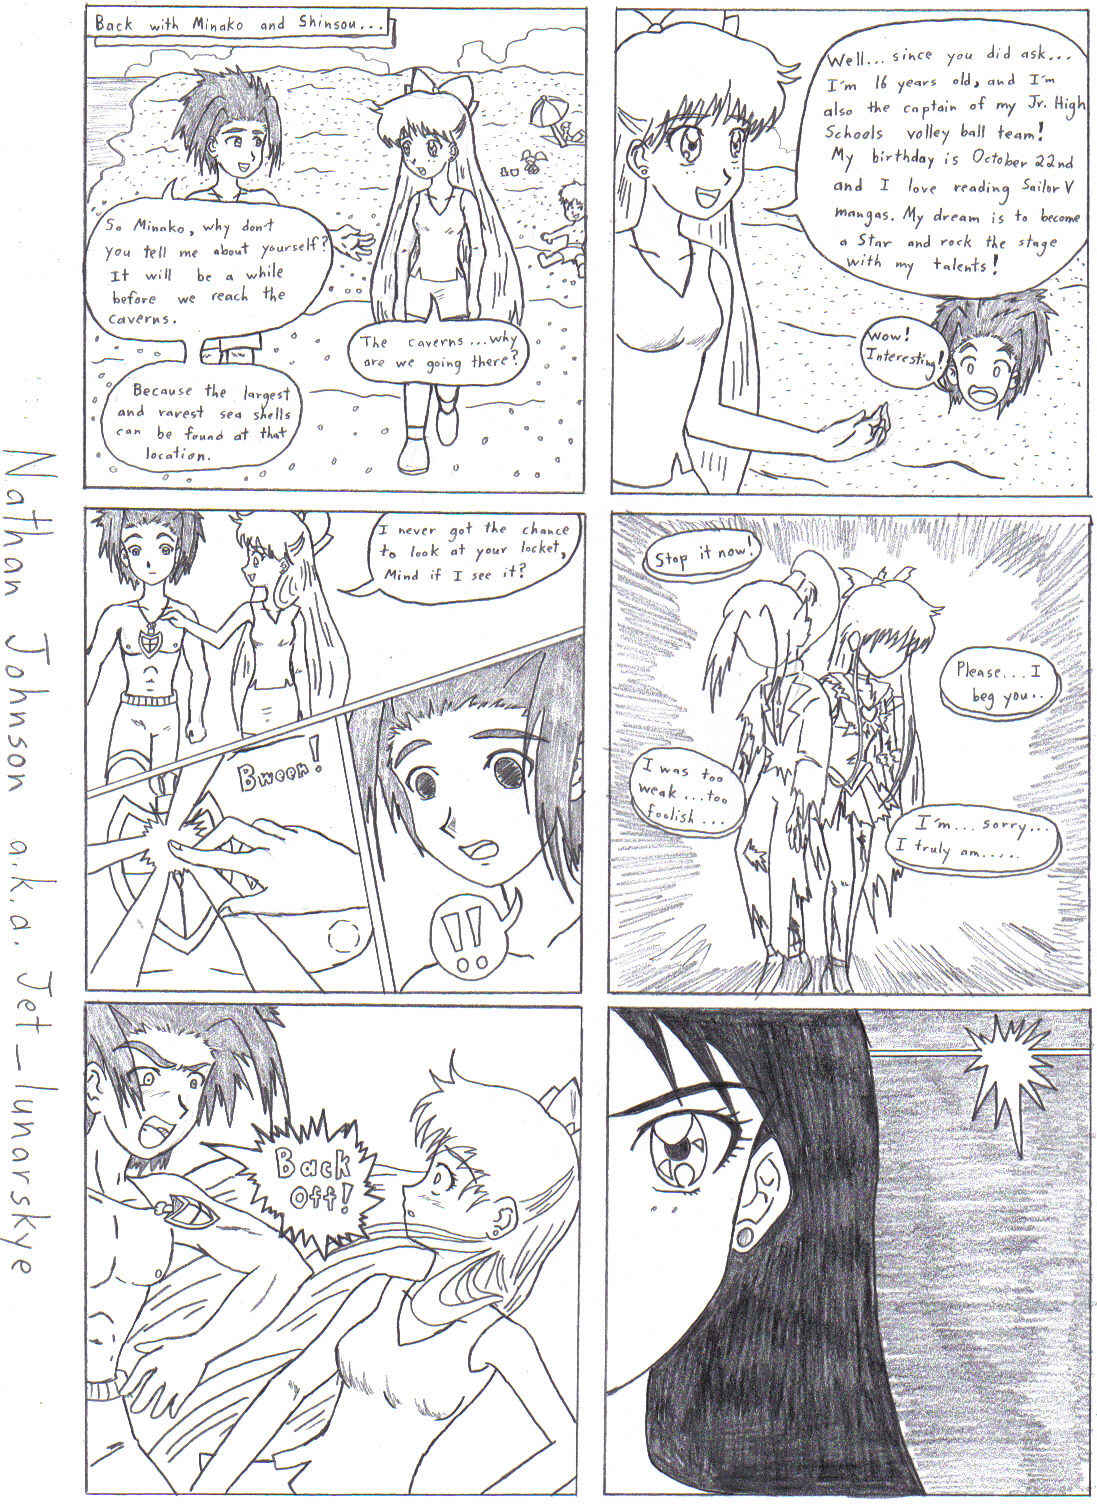 A Soldier's love: Page 17 by Jet_lunarskye